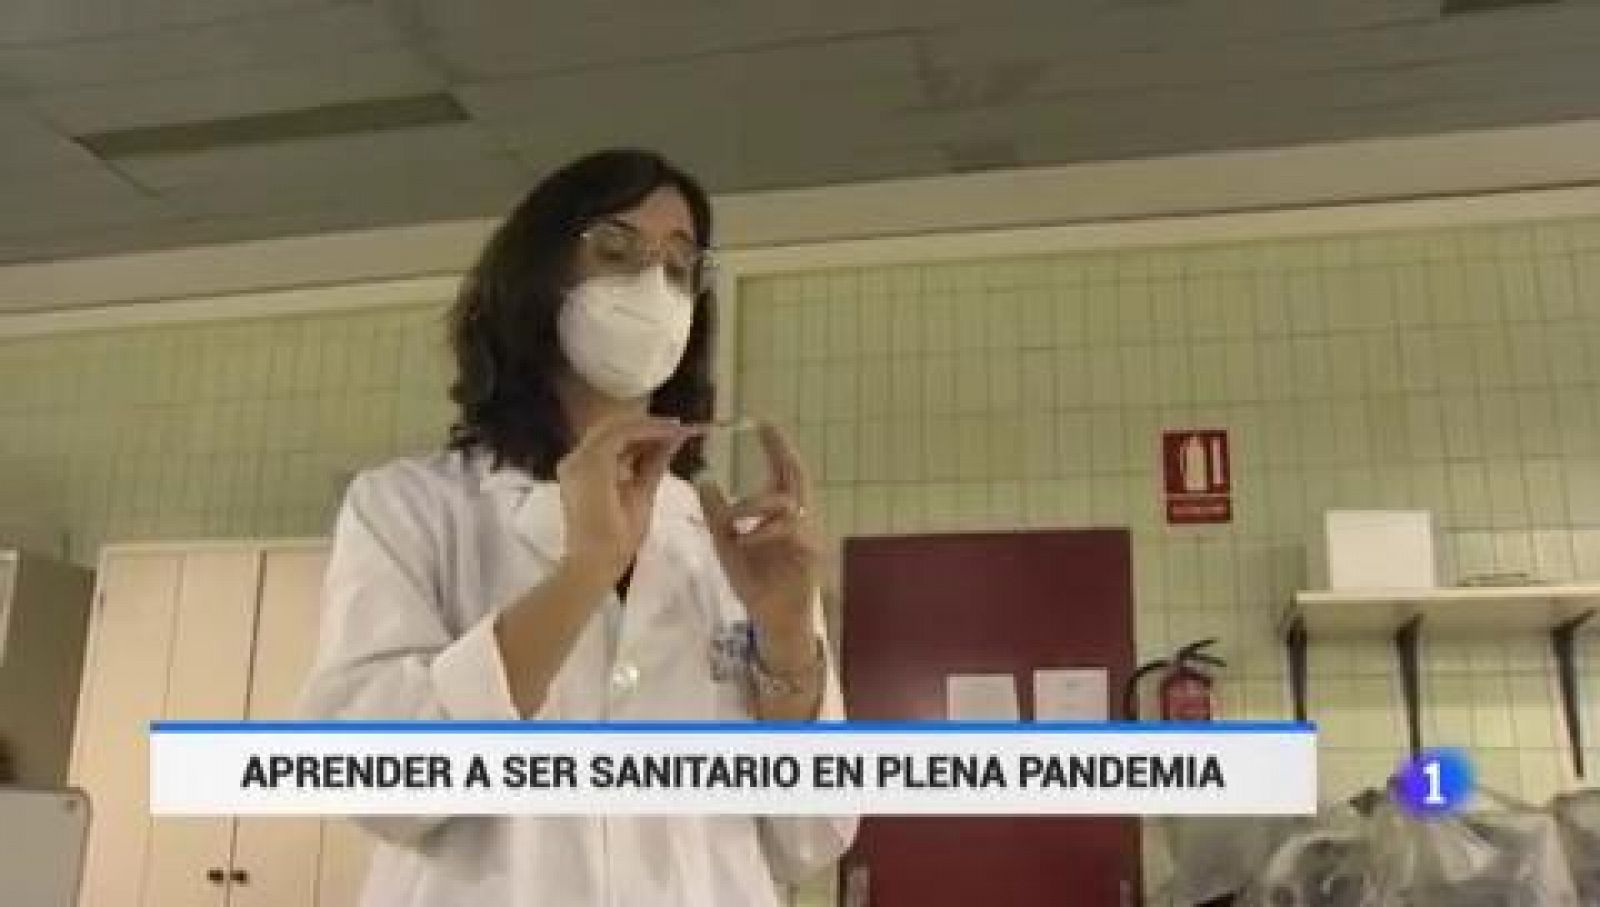 Aprender a ser sanitario en plena pandemia